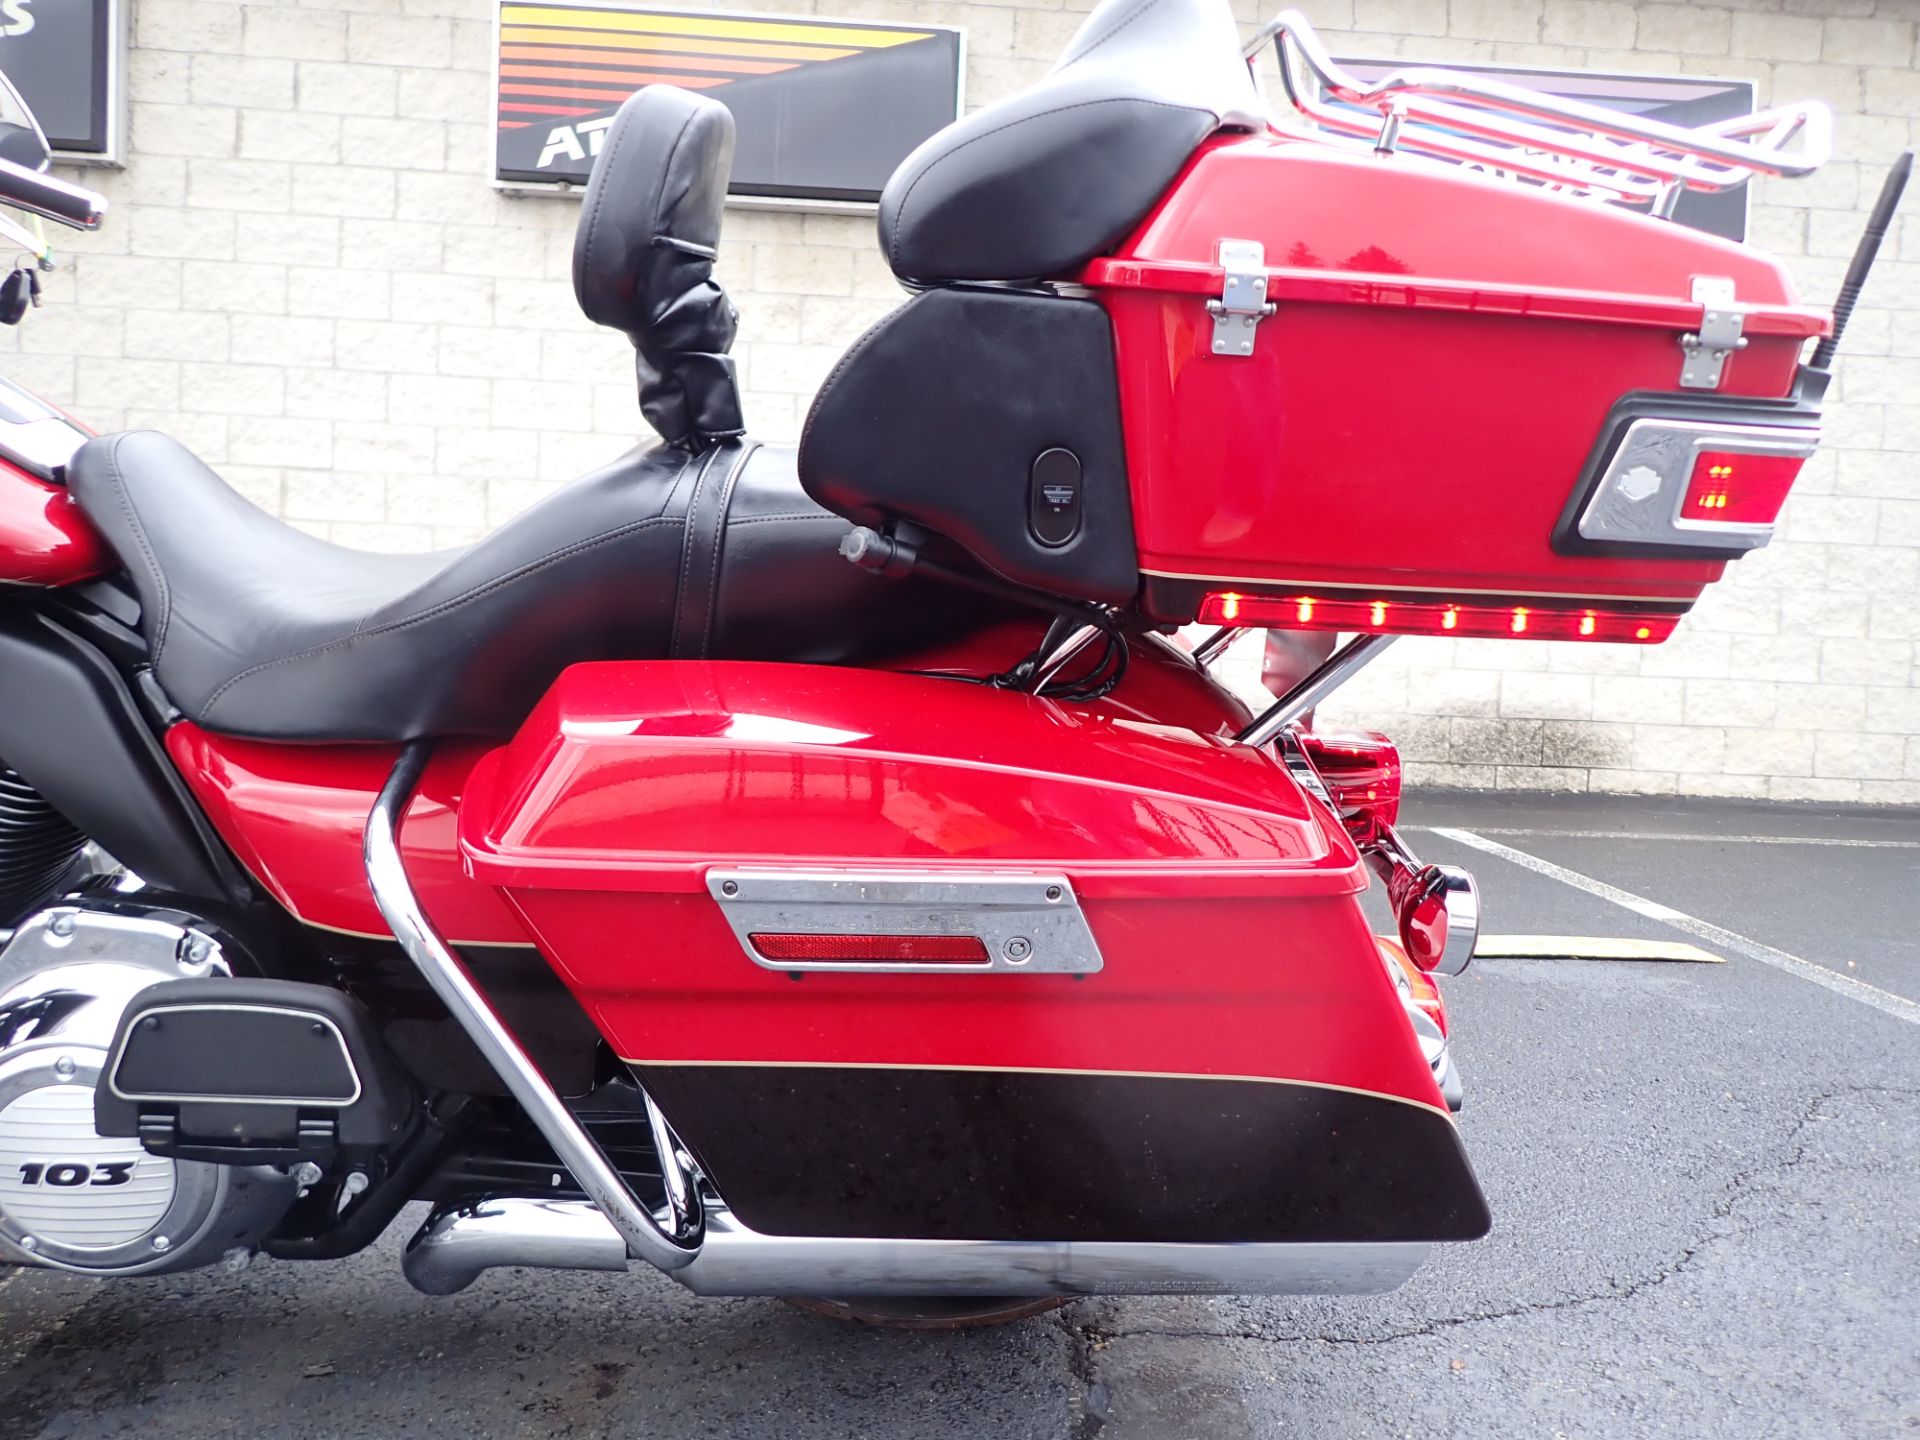 2011 Harley-Davidson Electra Glide® Ultra Limited in Massillon, Ohio - Photo 7